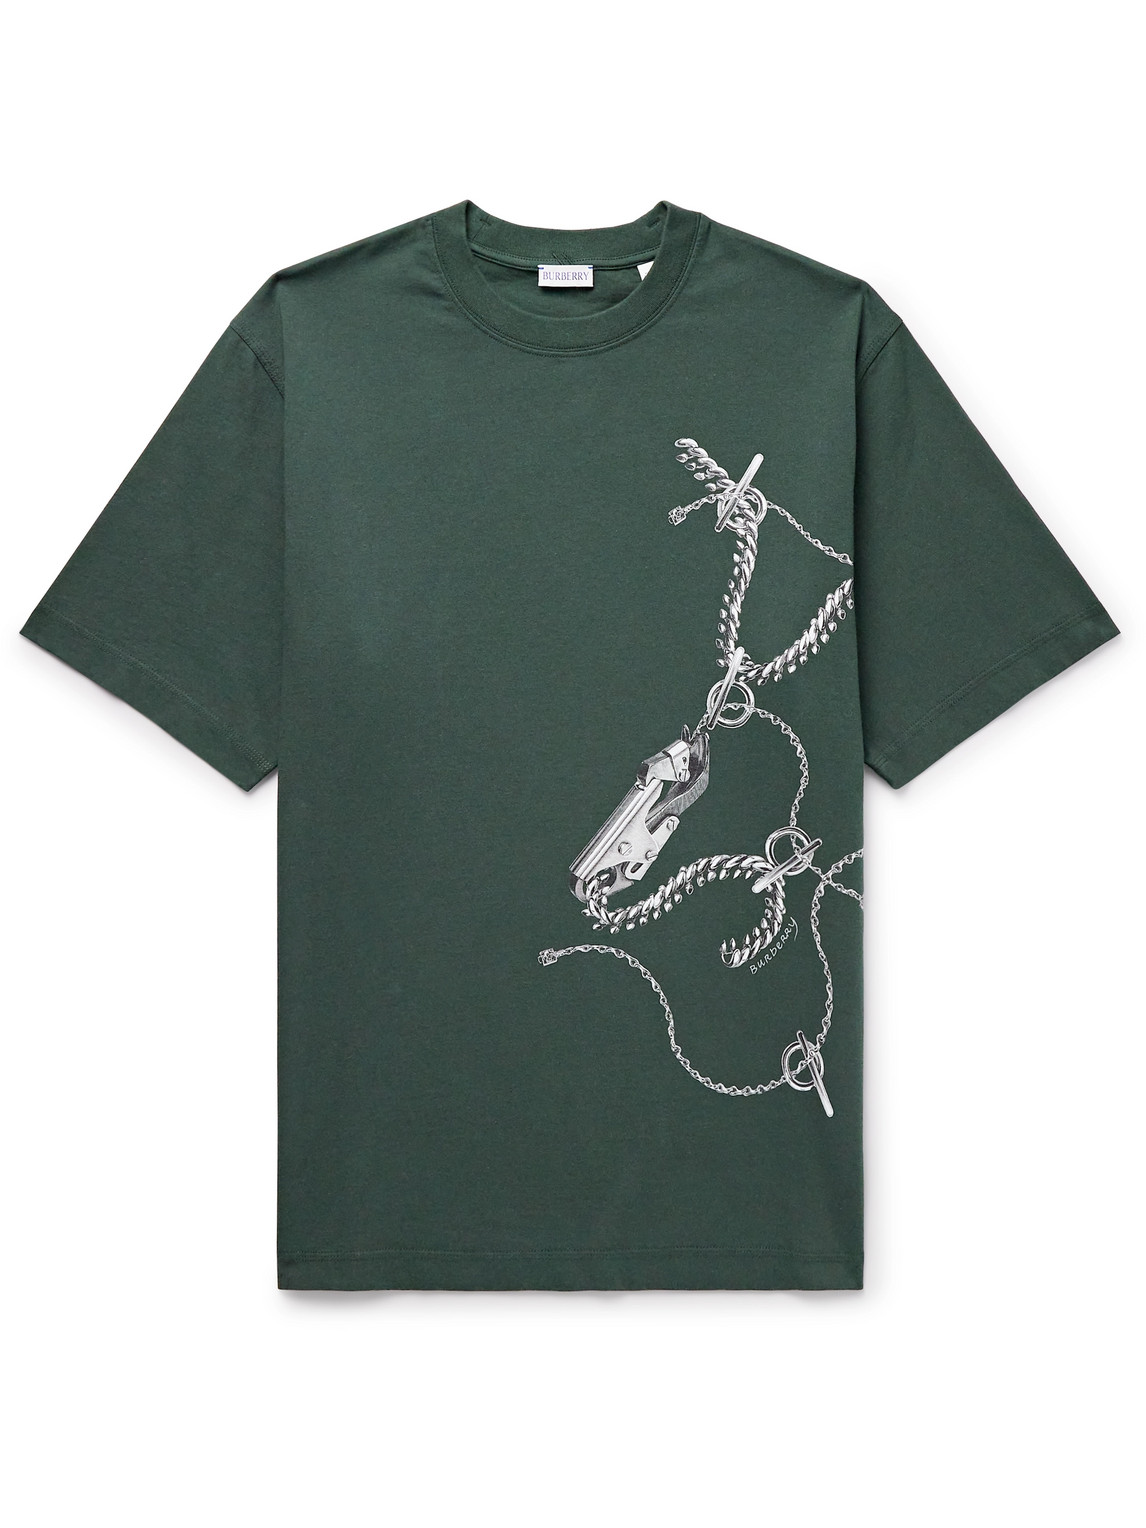 Burberry - Printed Cotton-Jersey T-Shirt - Men - Green - L von Burberry